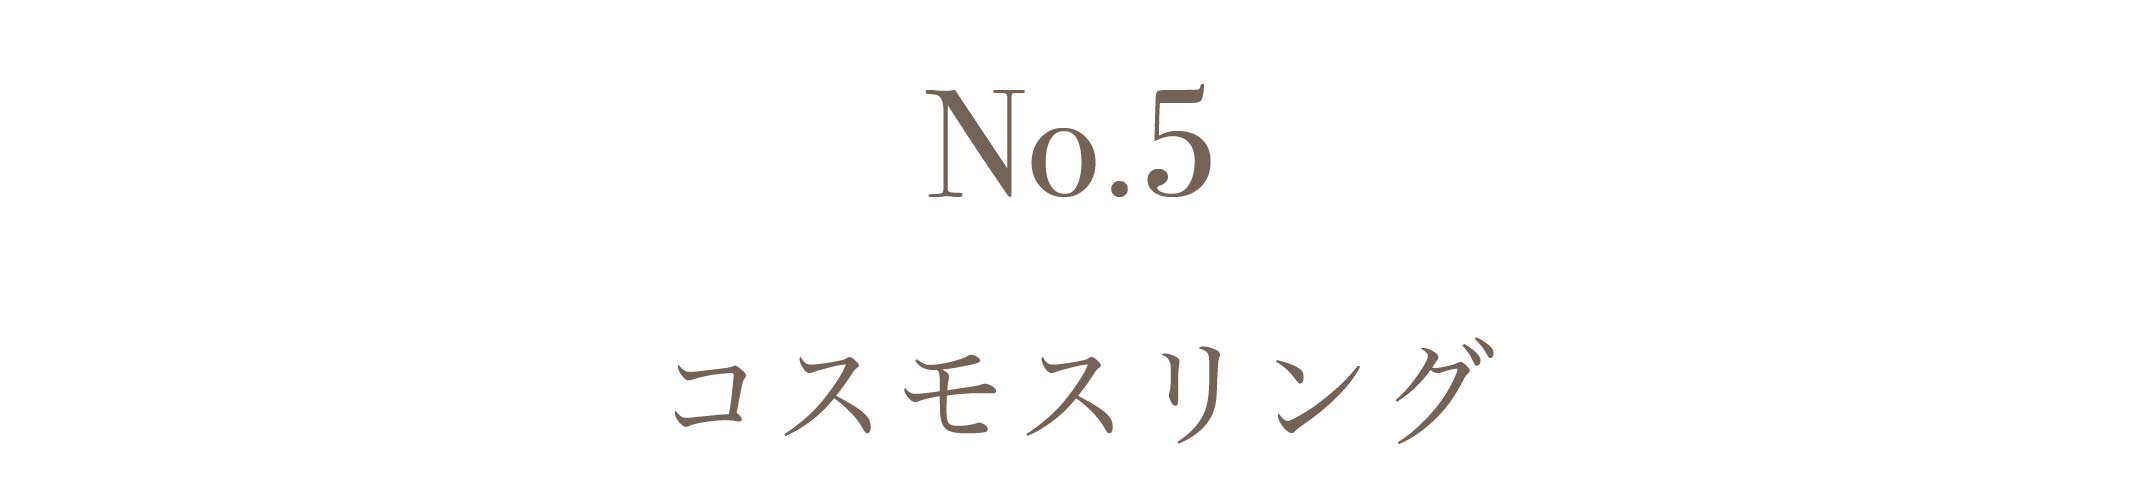 No.5コスモス